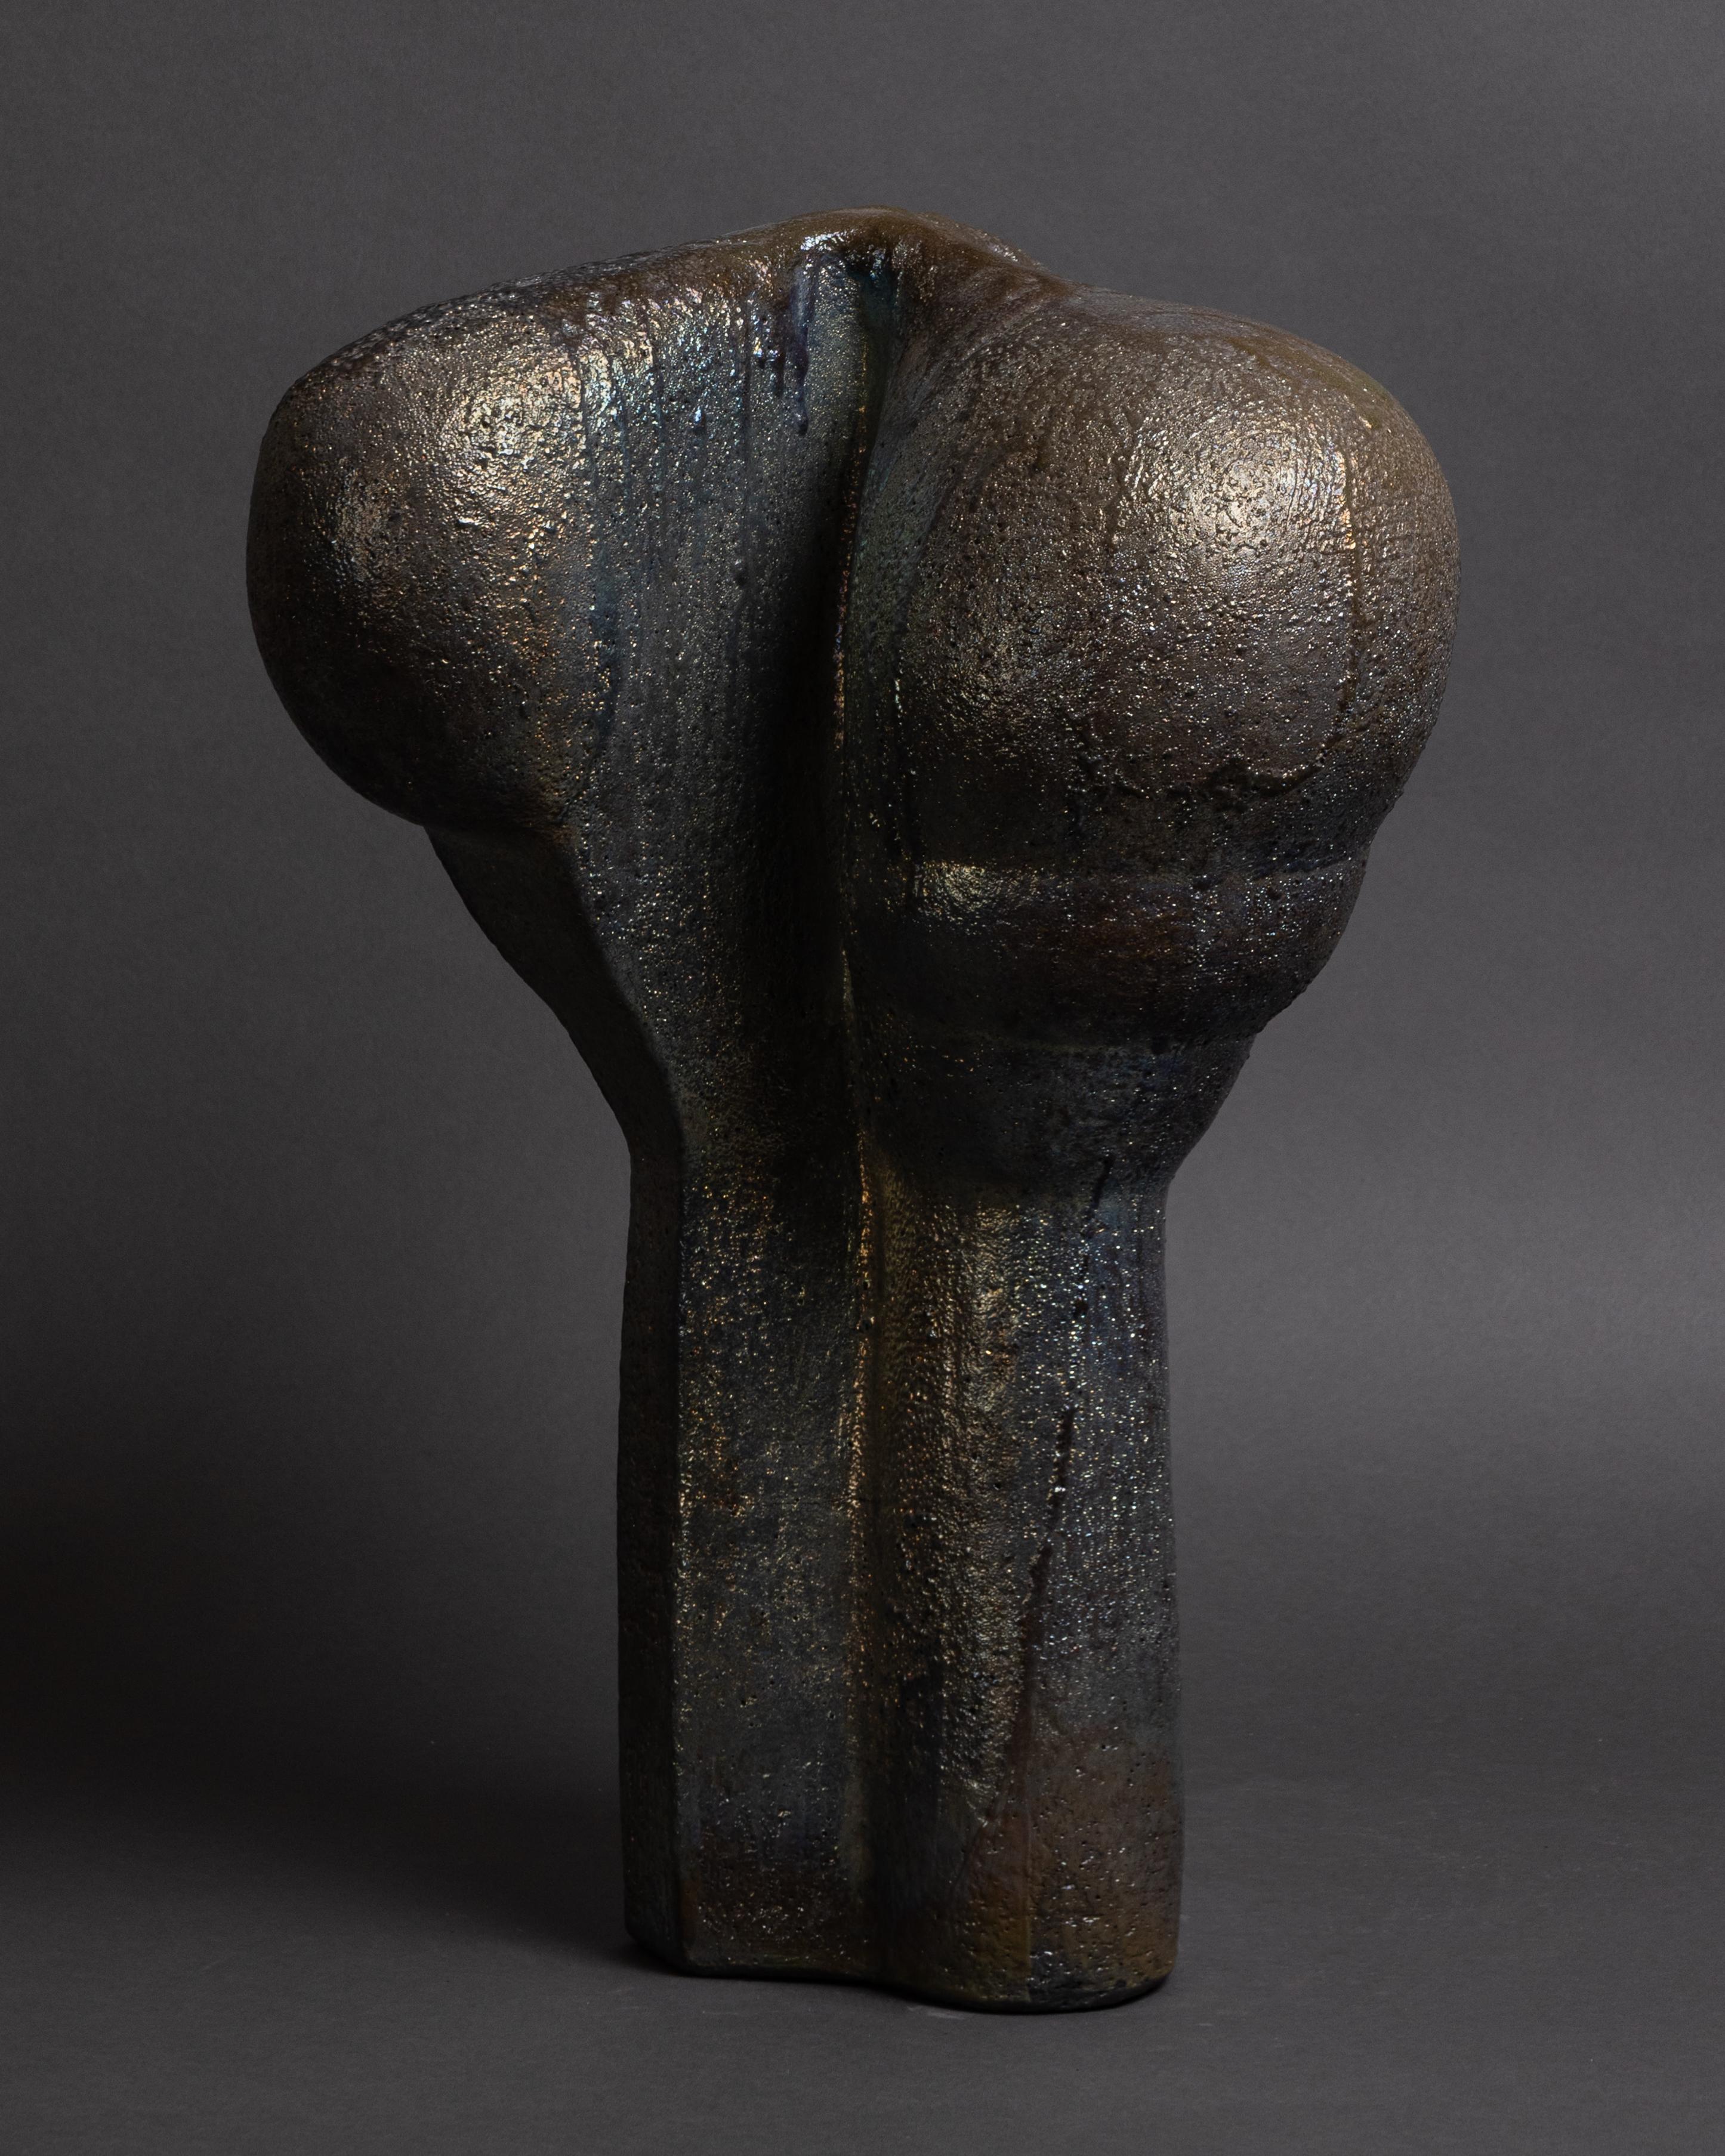 Suédois Abstract, Contemporary ceramic sculpture by Bo Arenander, In-stock en vente